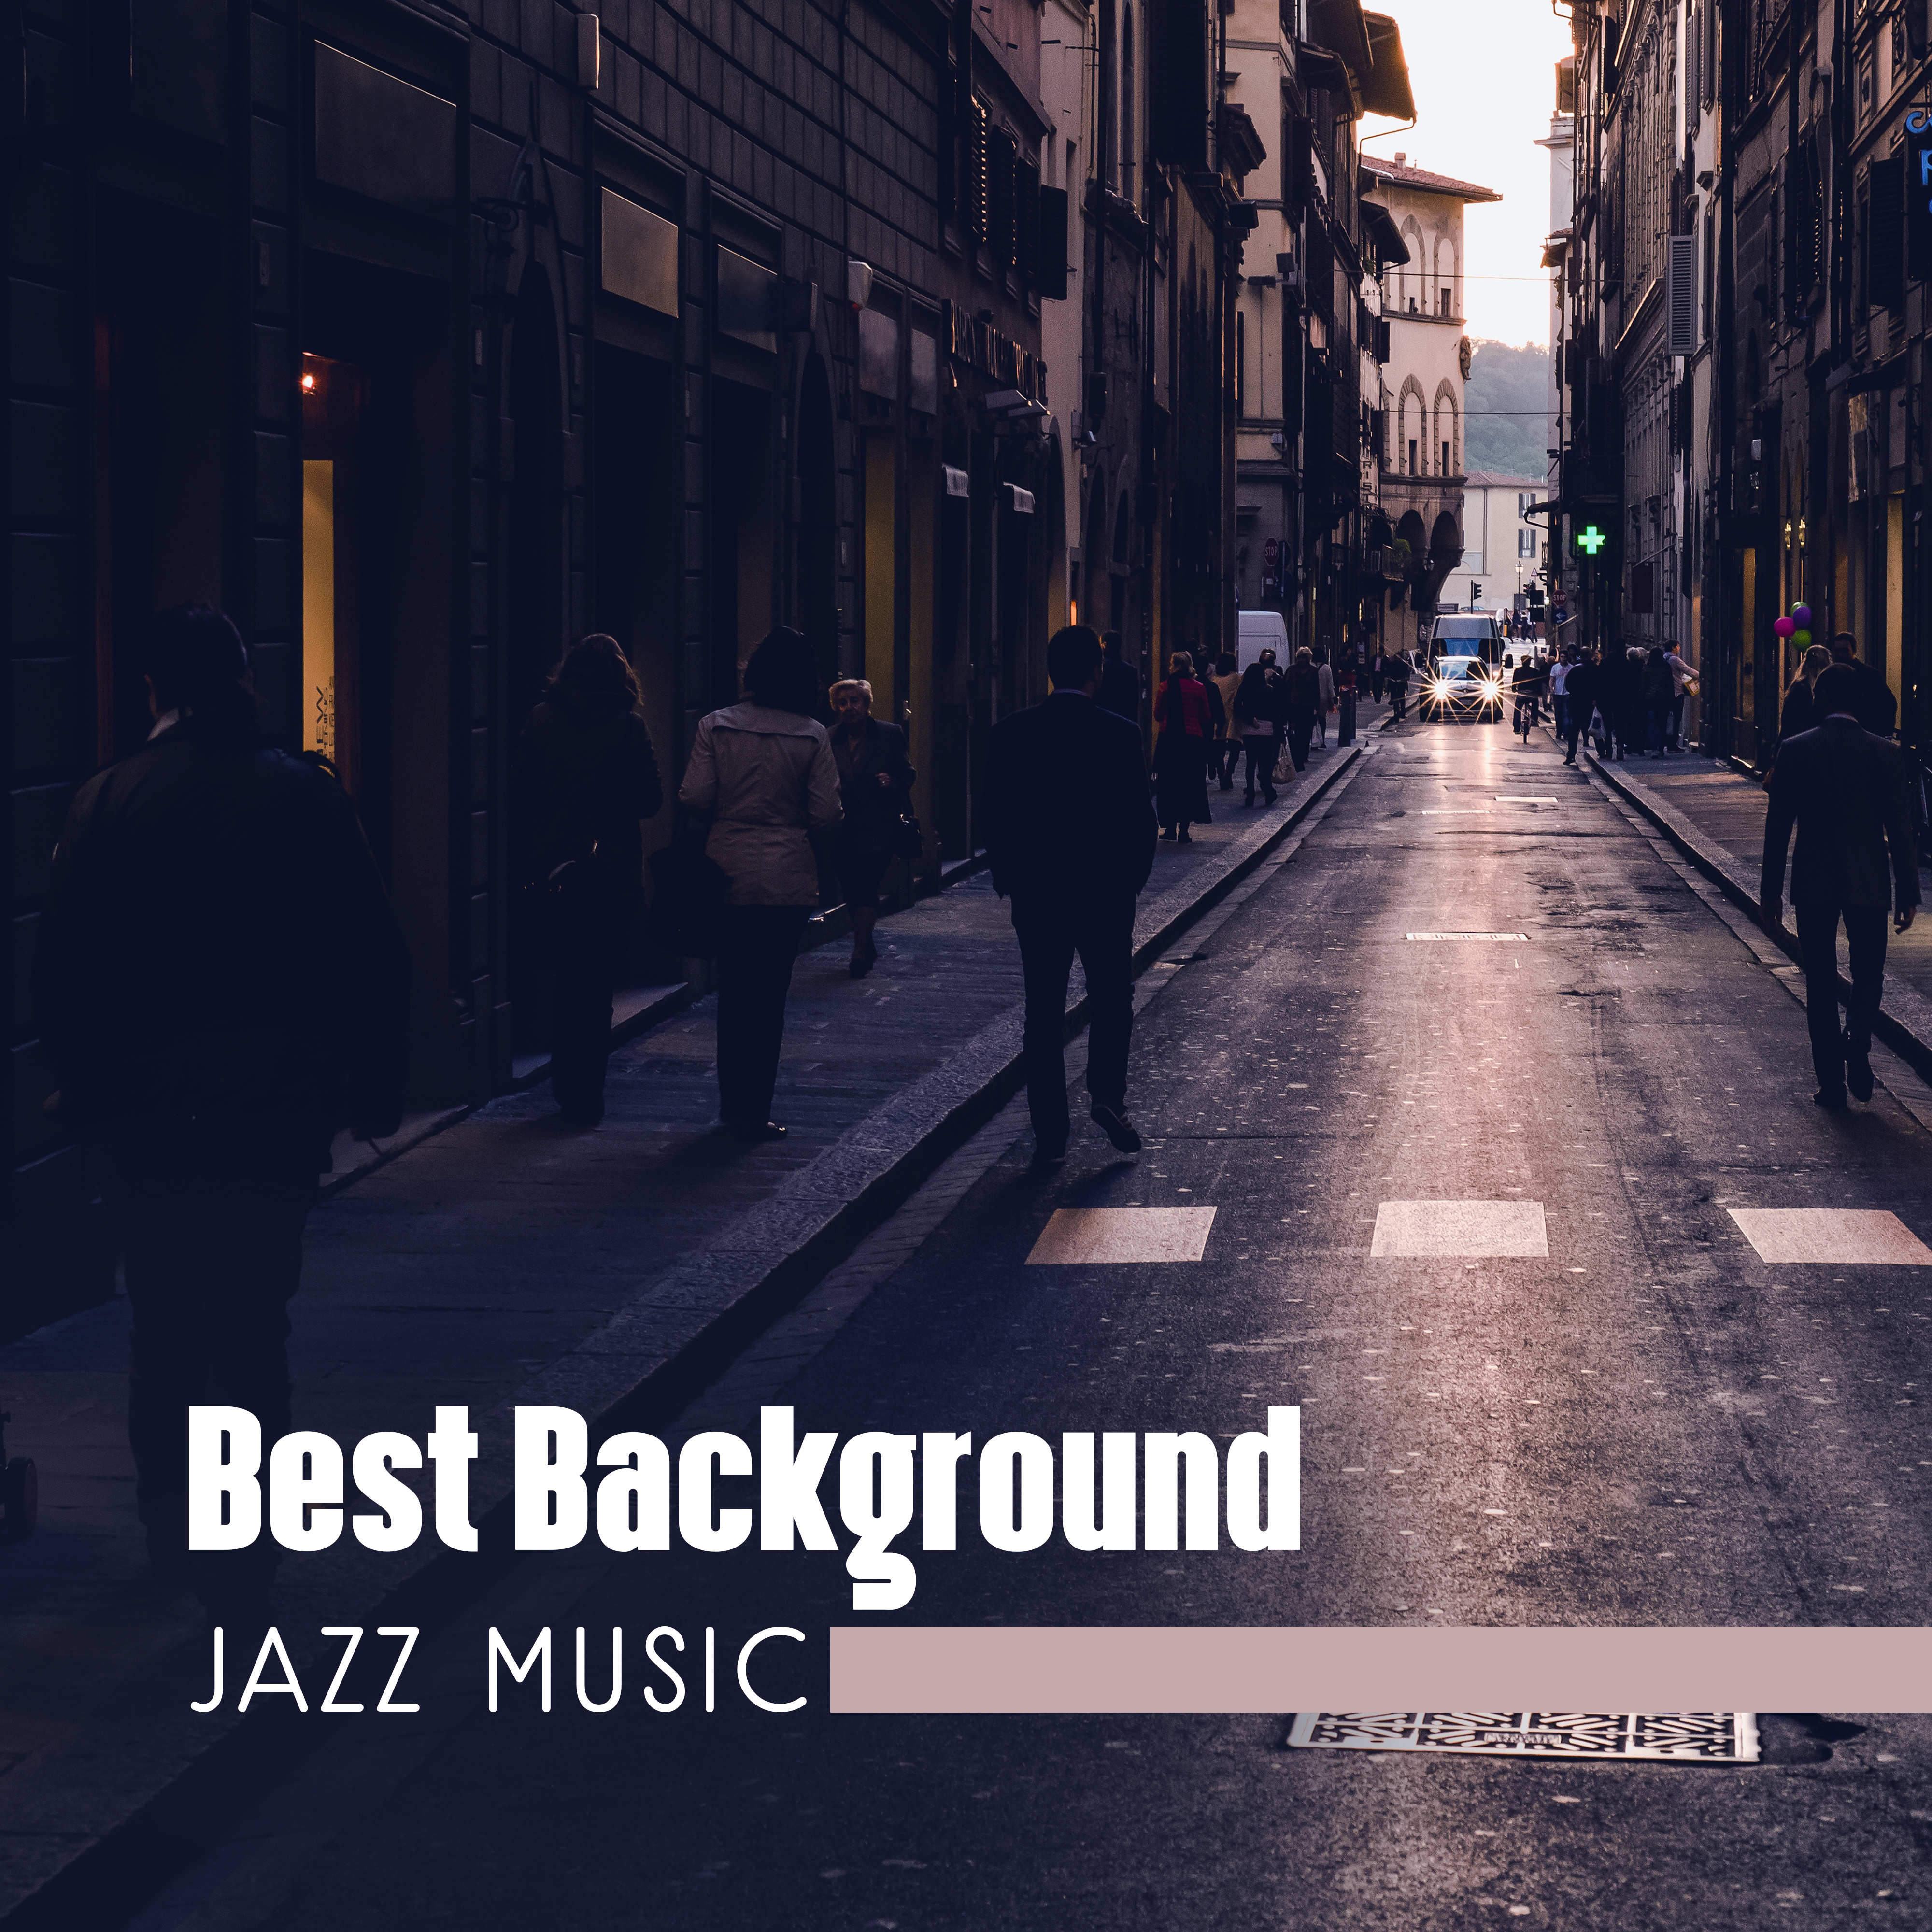 Best Background Jazz Music  Jazz Relaxation, Dinner Time, Music for Cafe Restaurant, Easy Listening